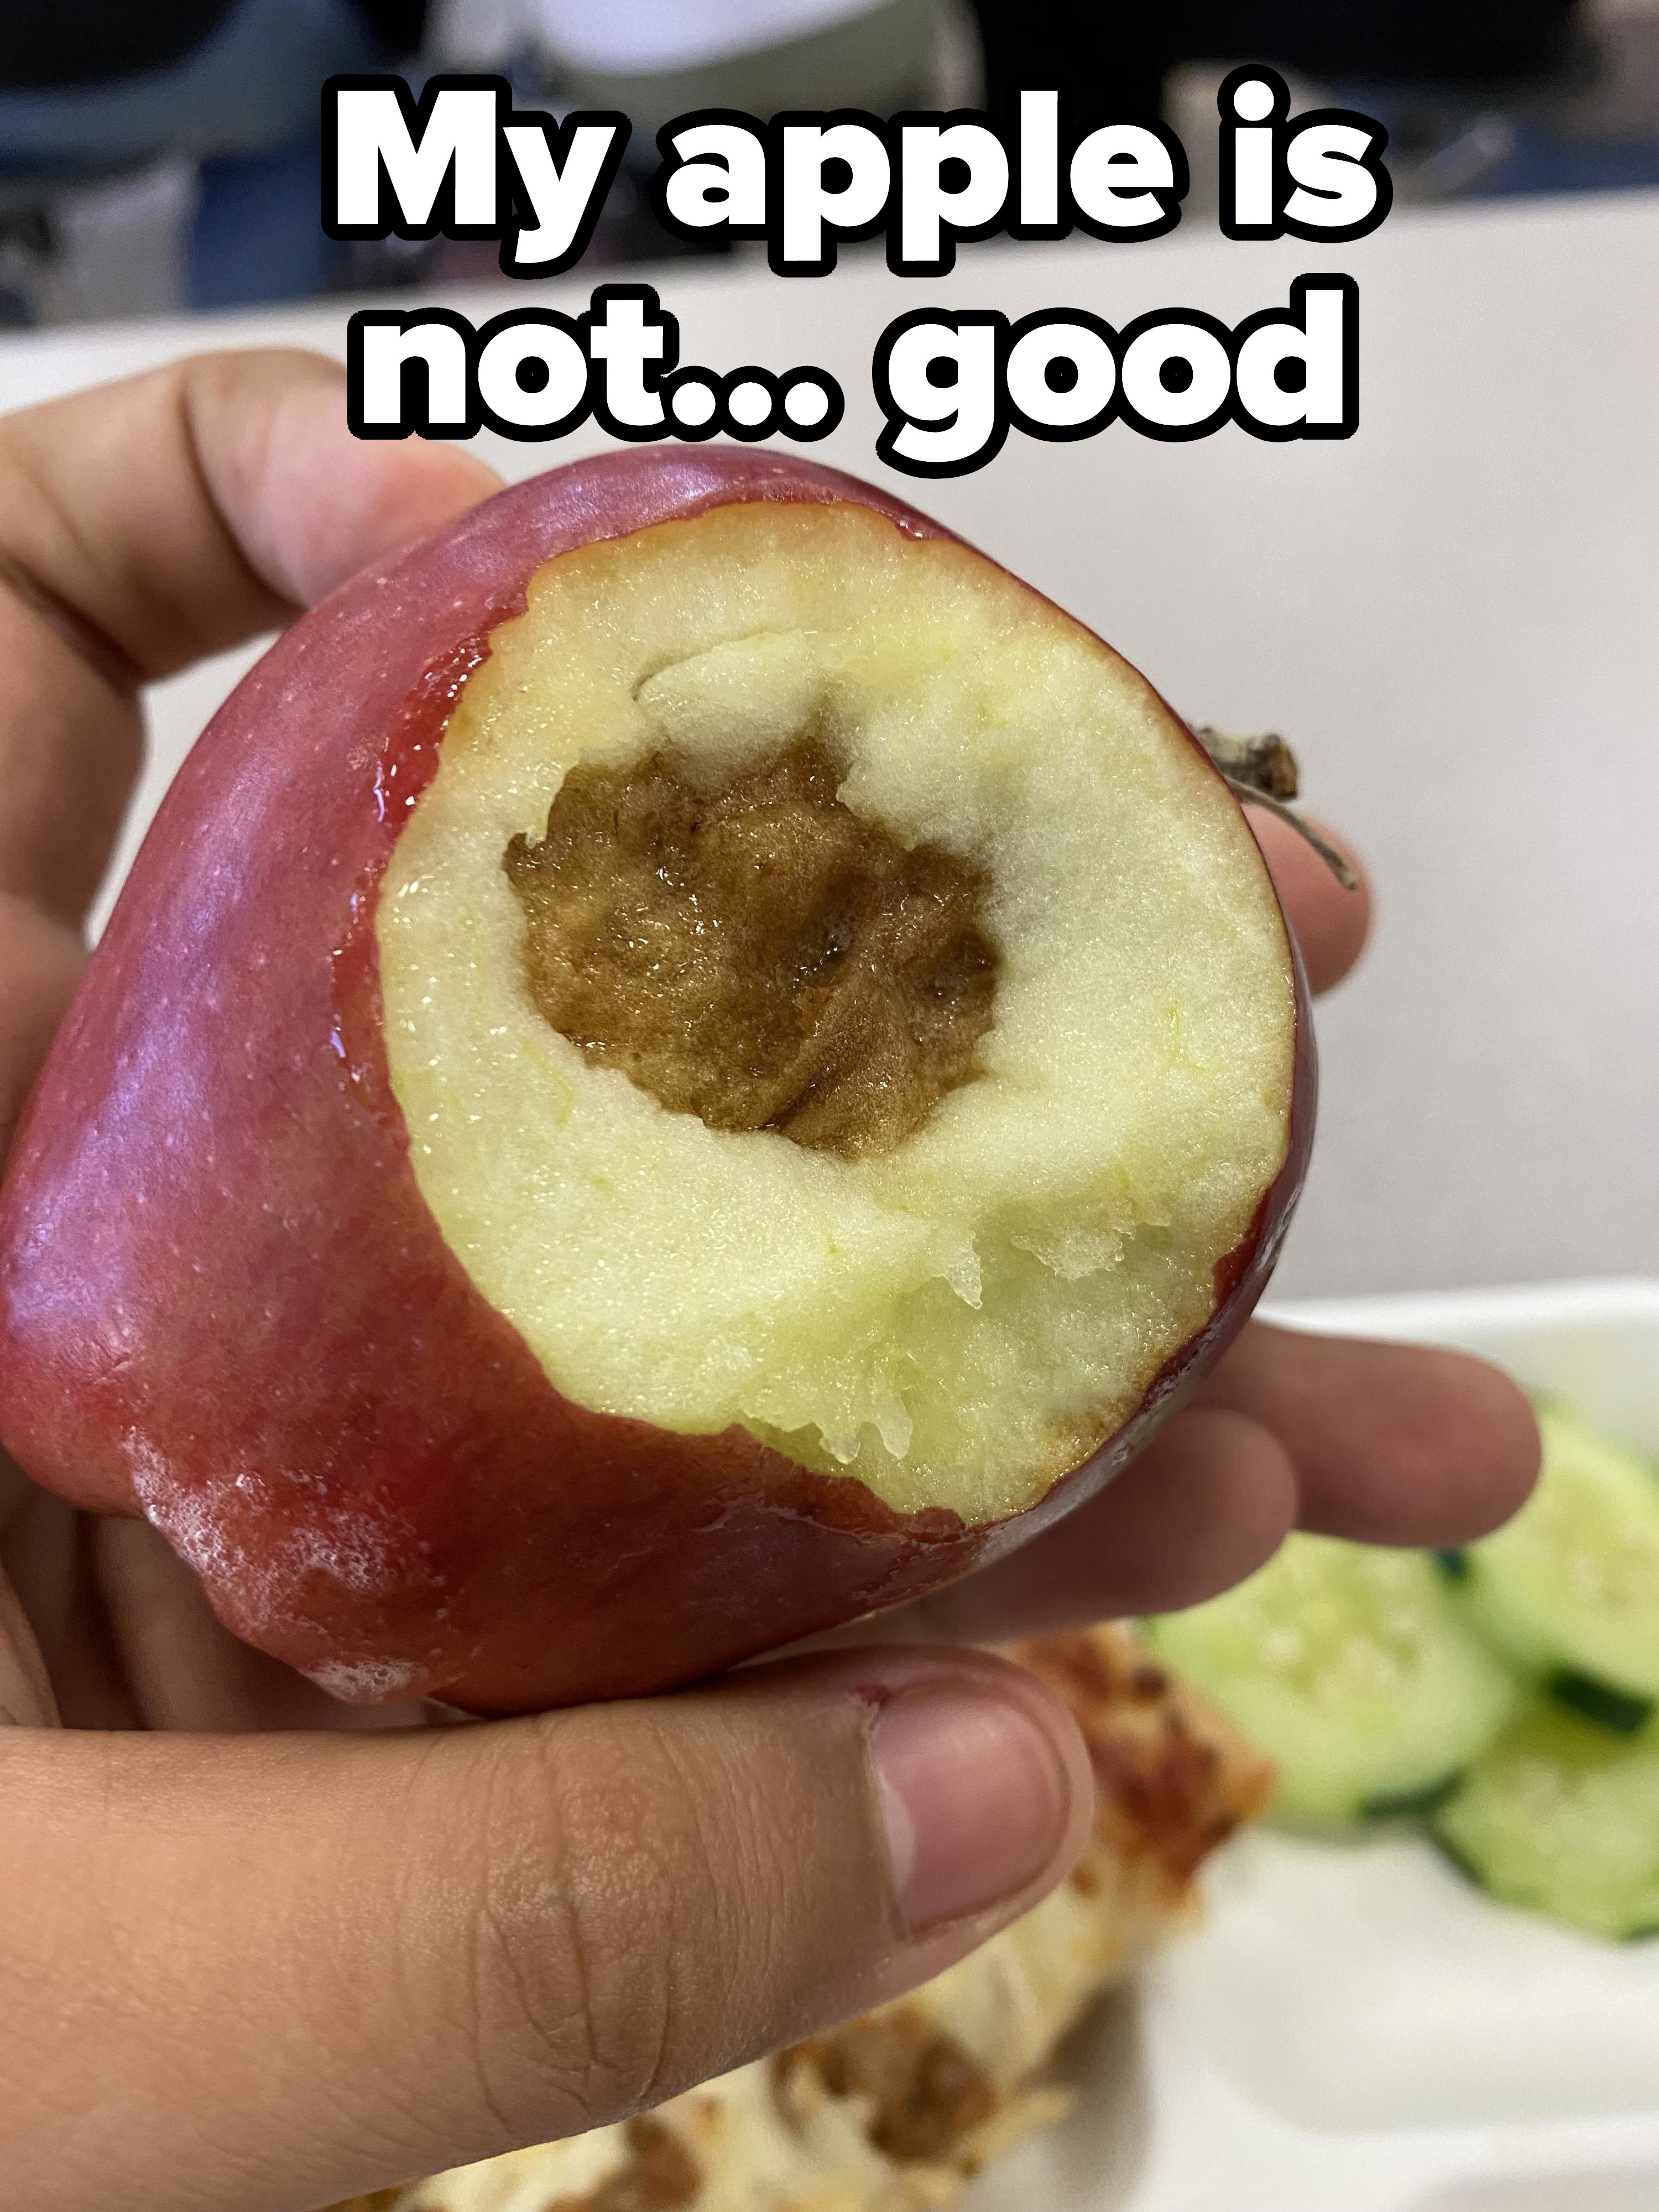 My apple is not...good